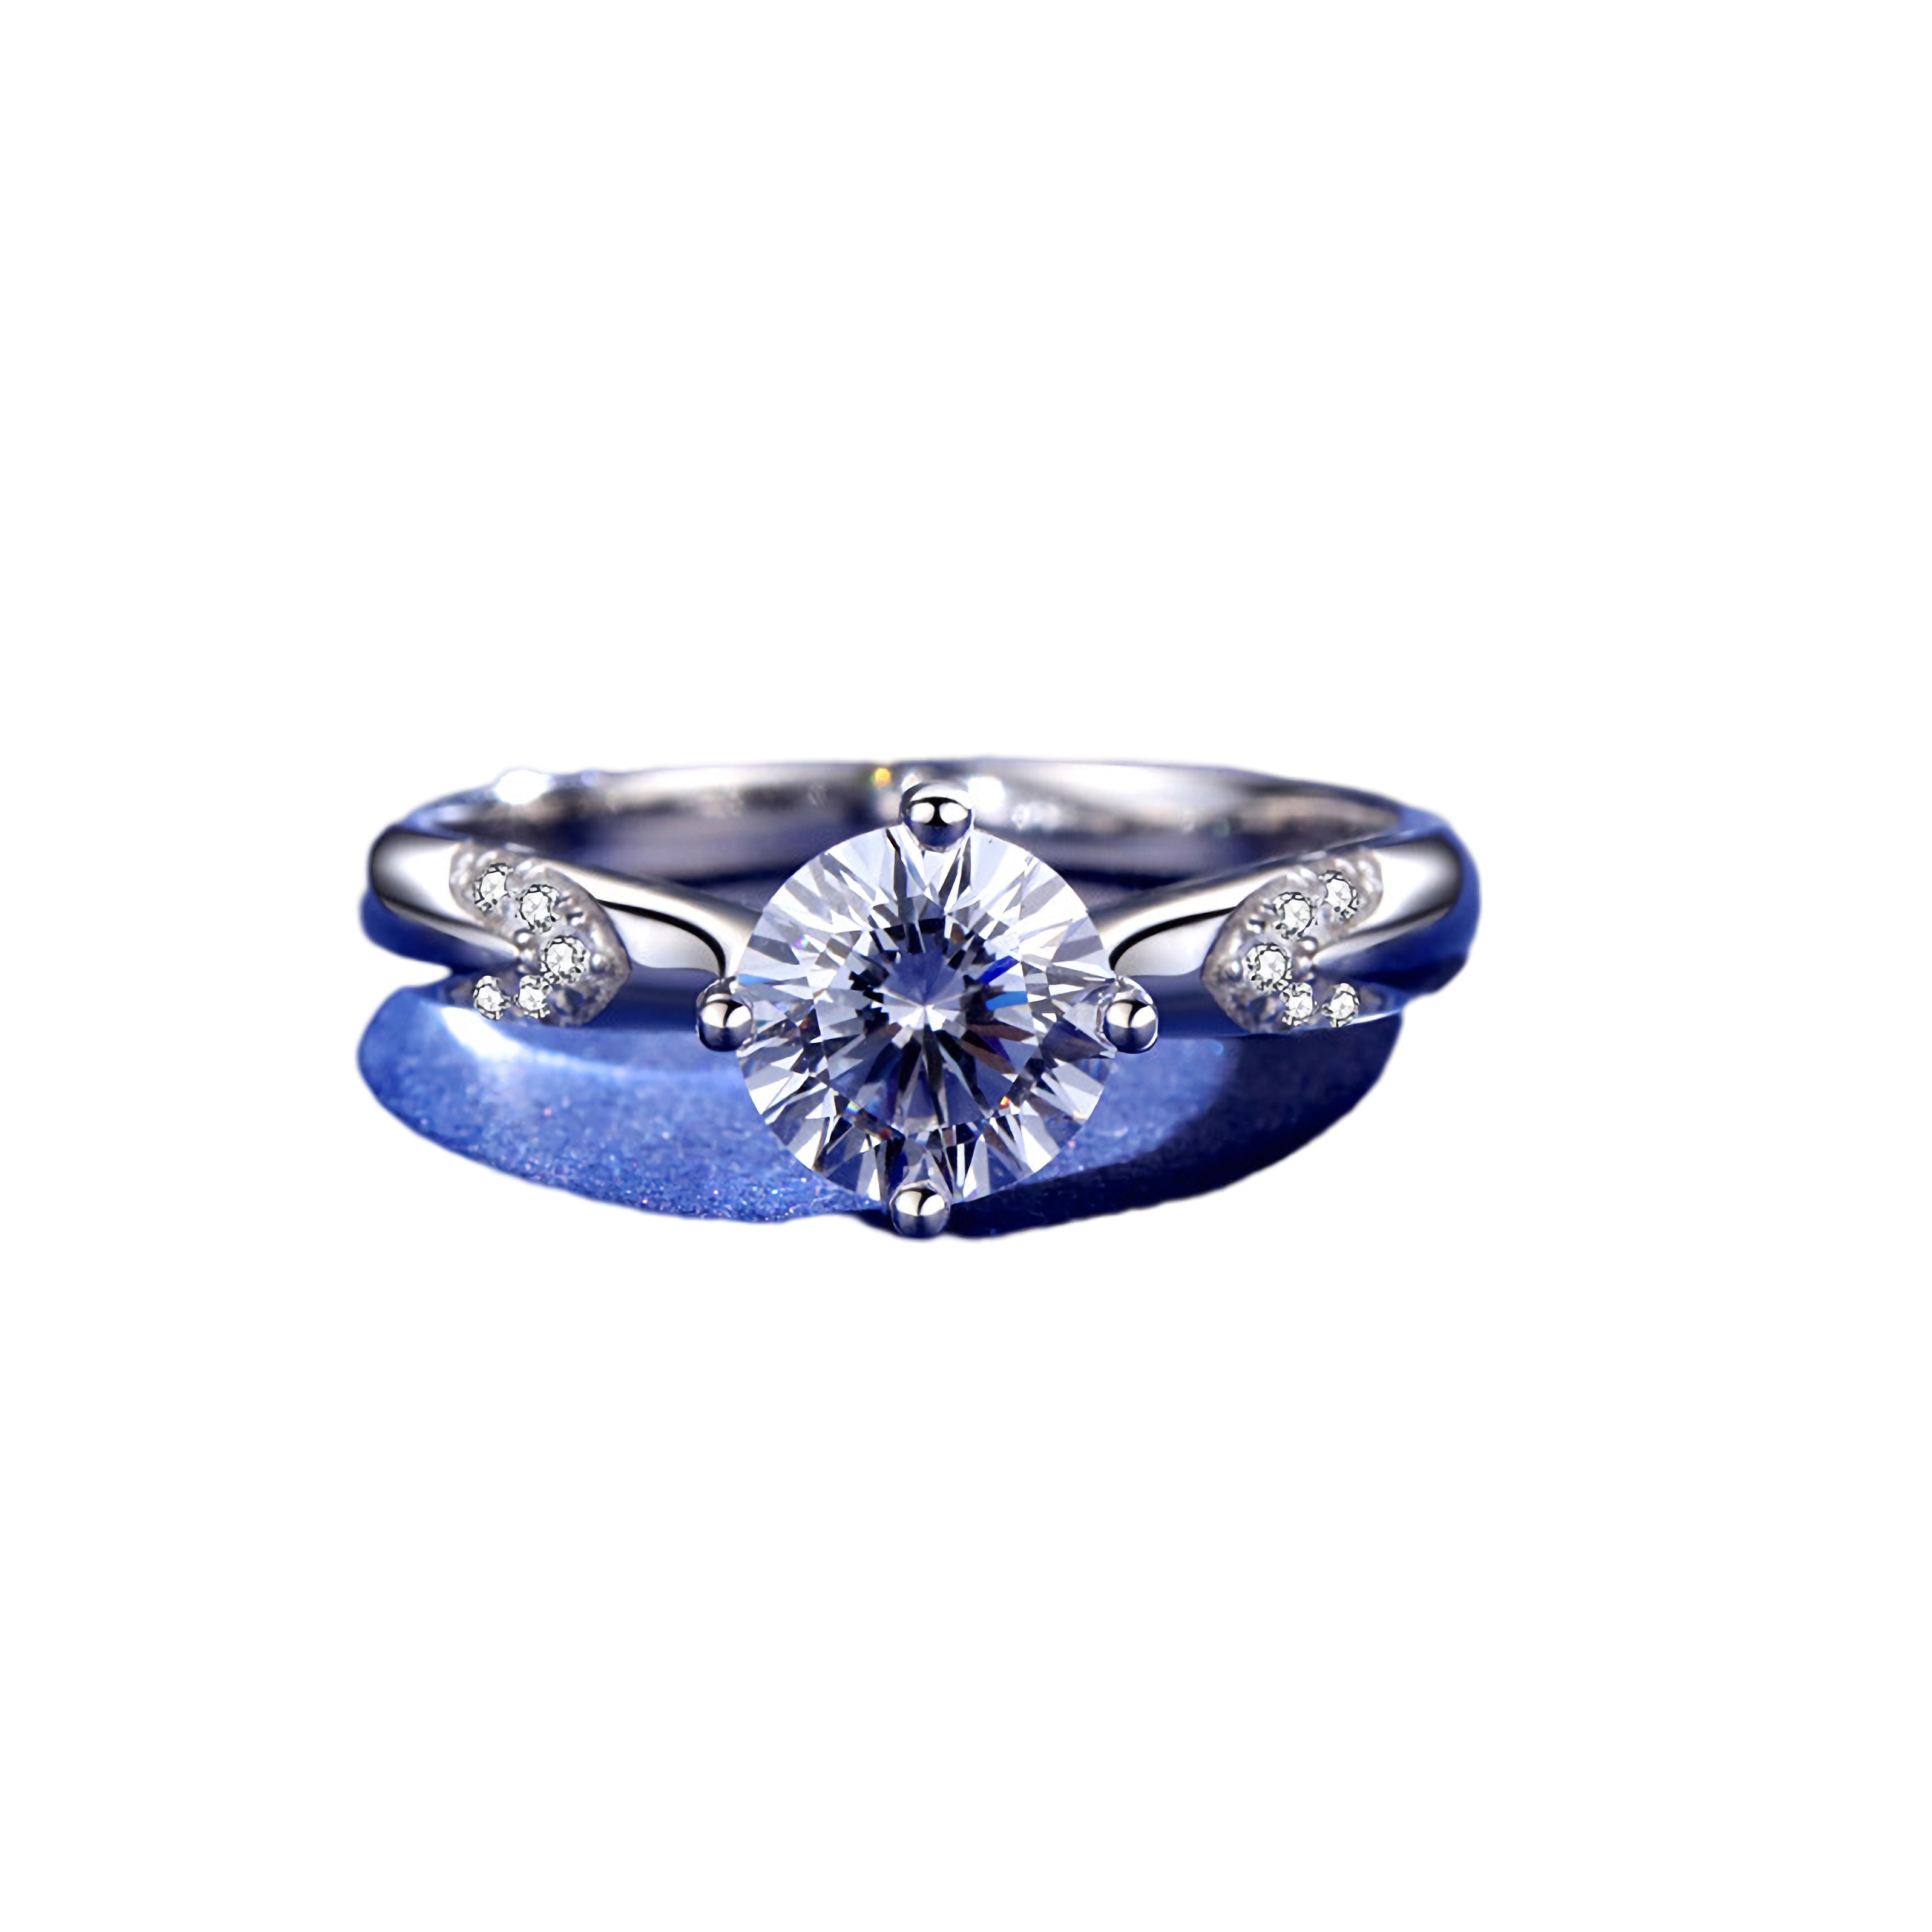 J1281 1 Carat Top Grade Moissanite Ring, Classic Style, Sterling Silver Rings for Women, Handmade Wedding Engagement Gift For Her